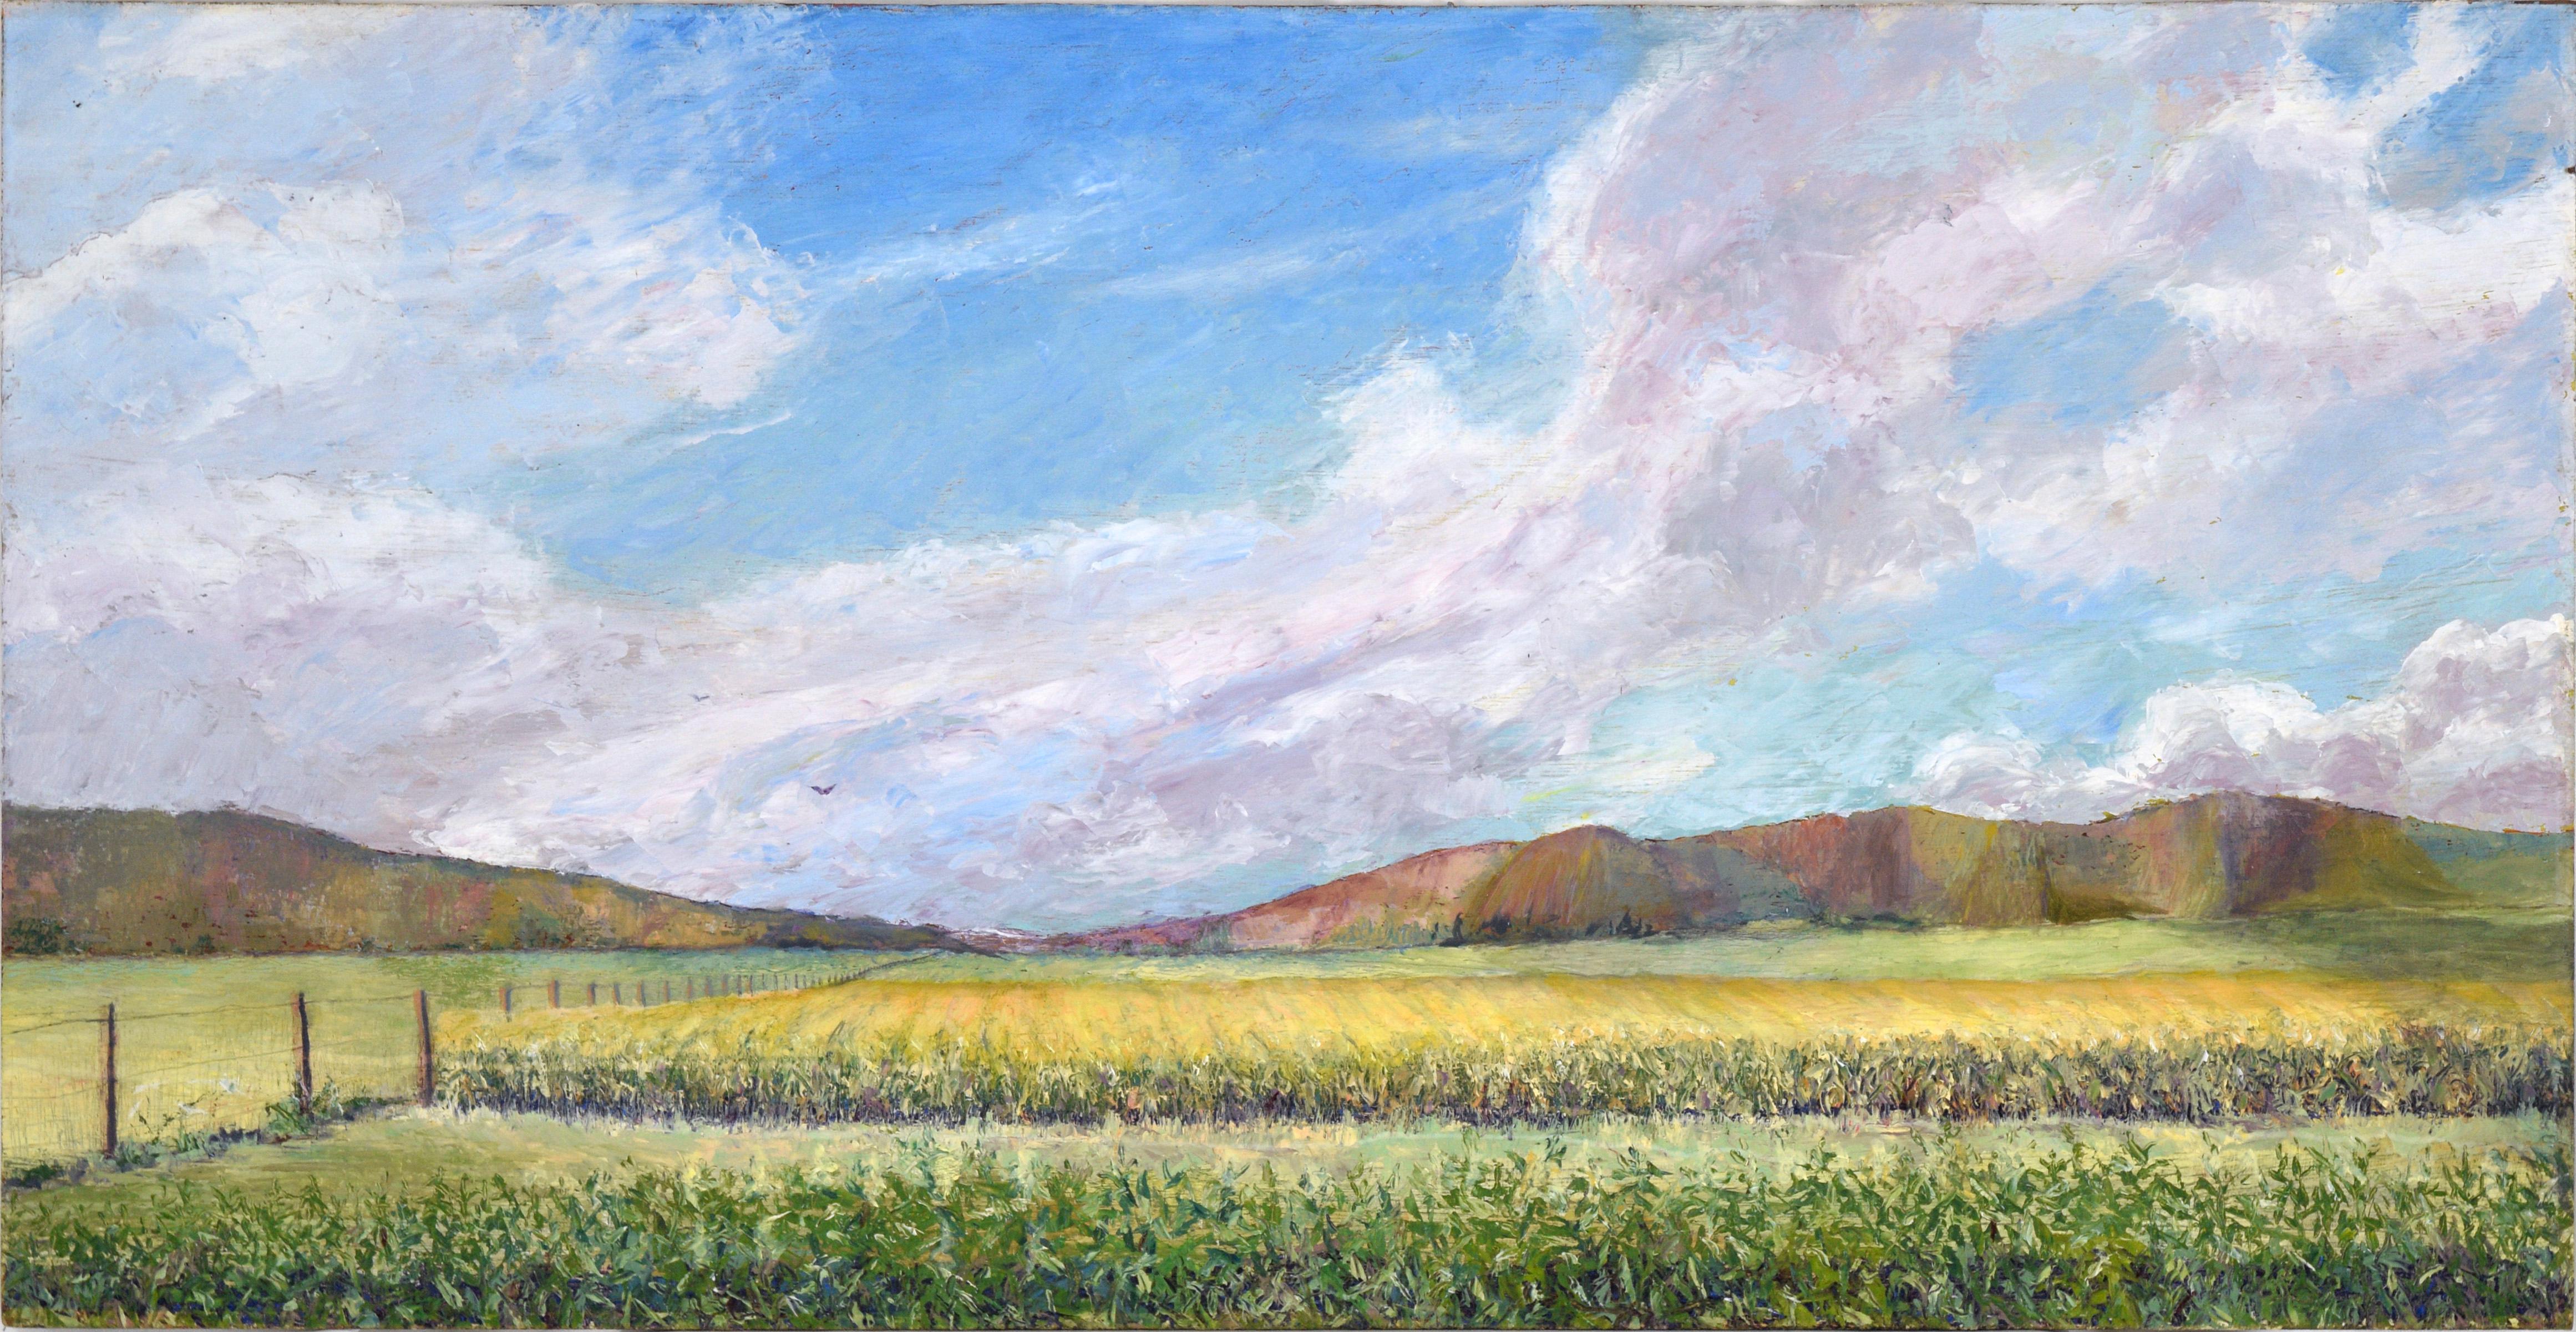 Purple Clouds Above Cornfields on the Farm - Landscape in Oil on Masonite